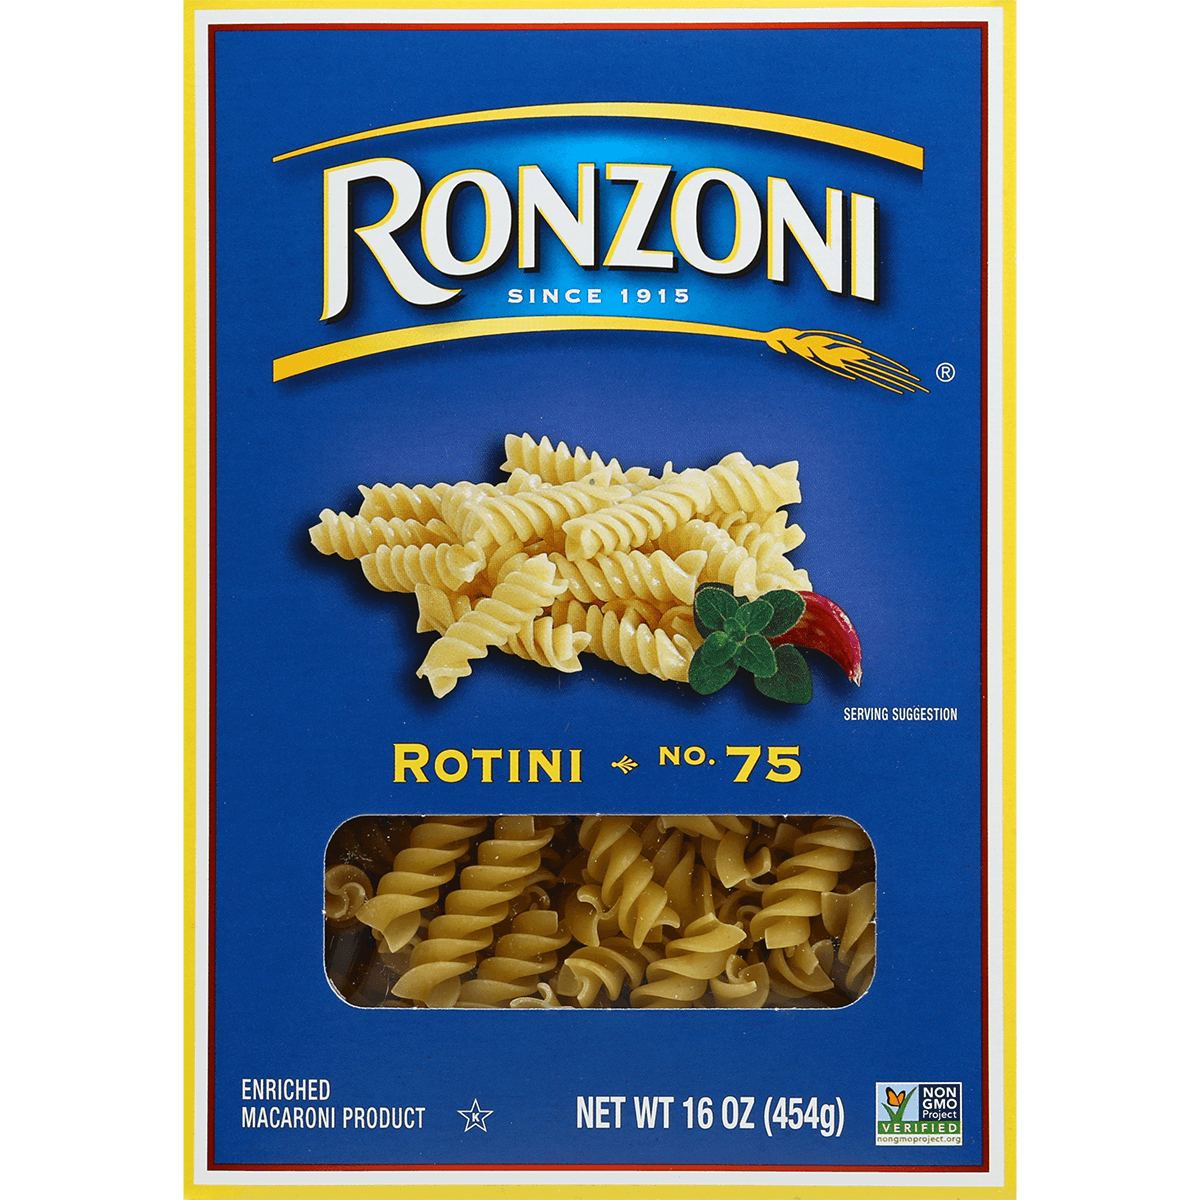 Ronzoni Rotini 75 16oz